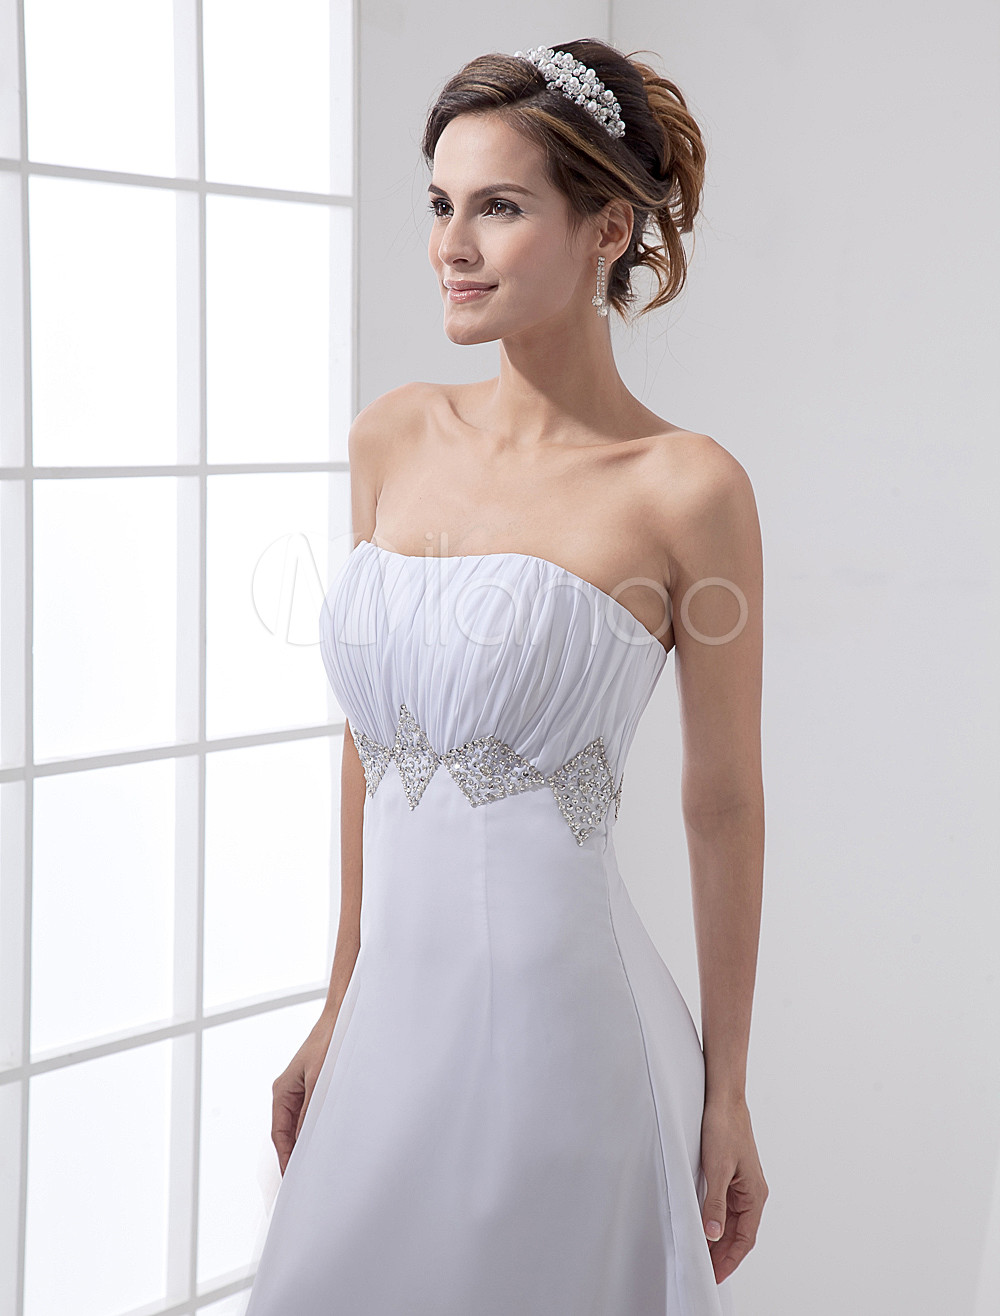 Exquisite White Satin And Chiffon Strapless Empire Waist Wedding Dress 0030